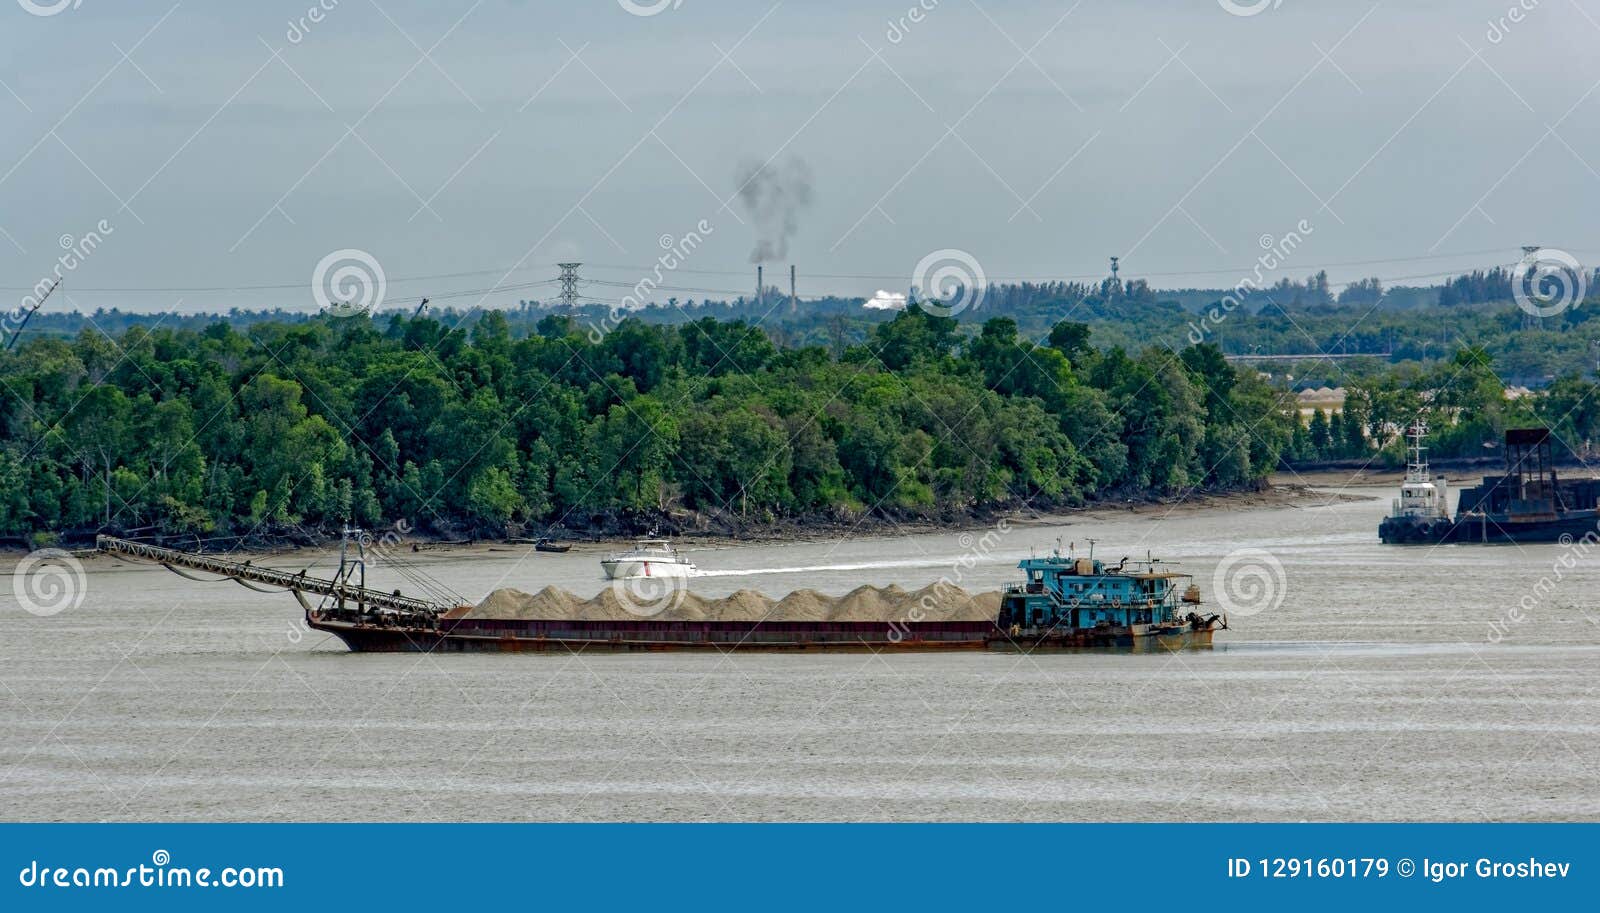 aggregates carrier vessel